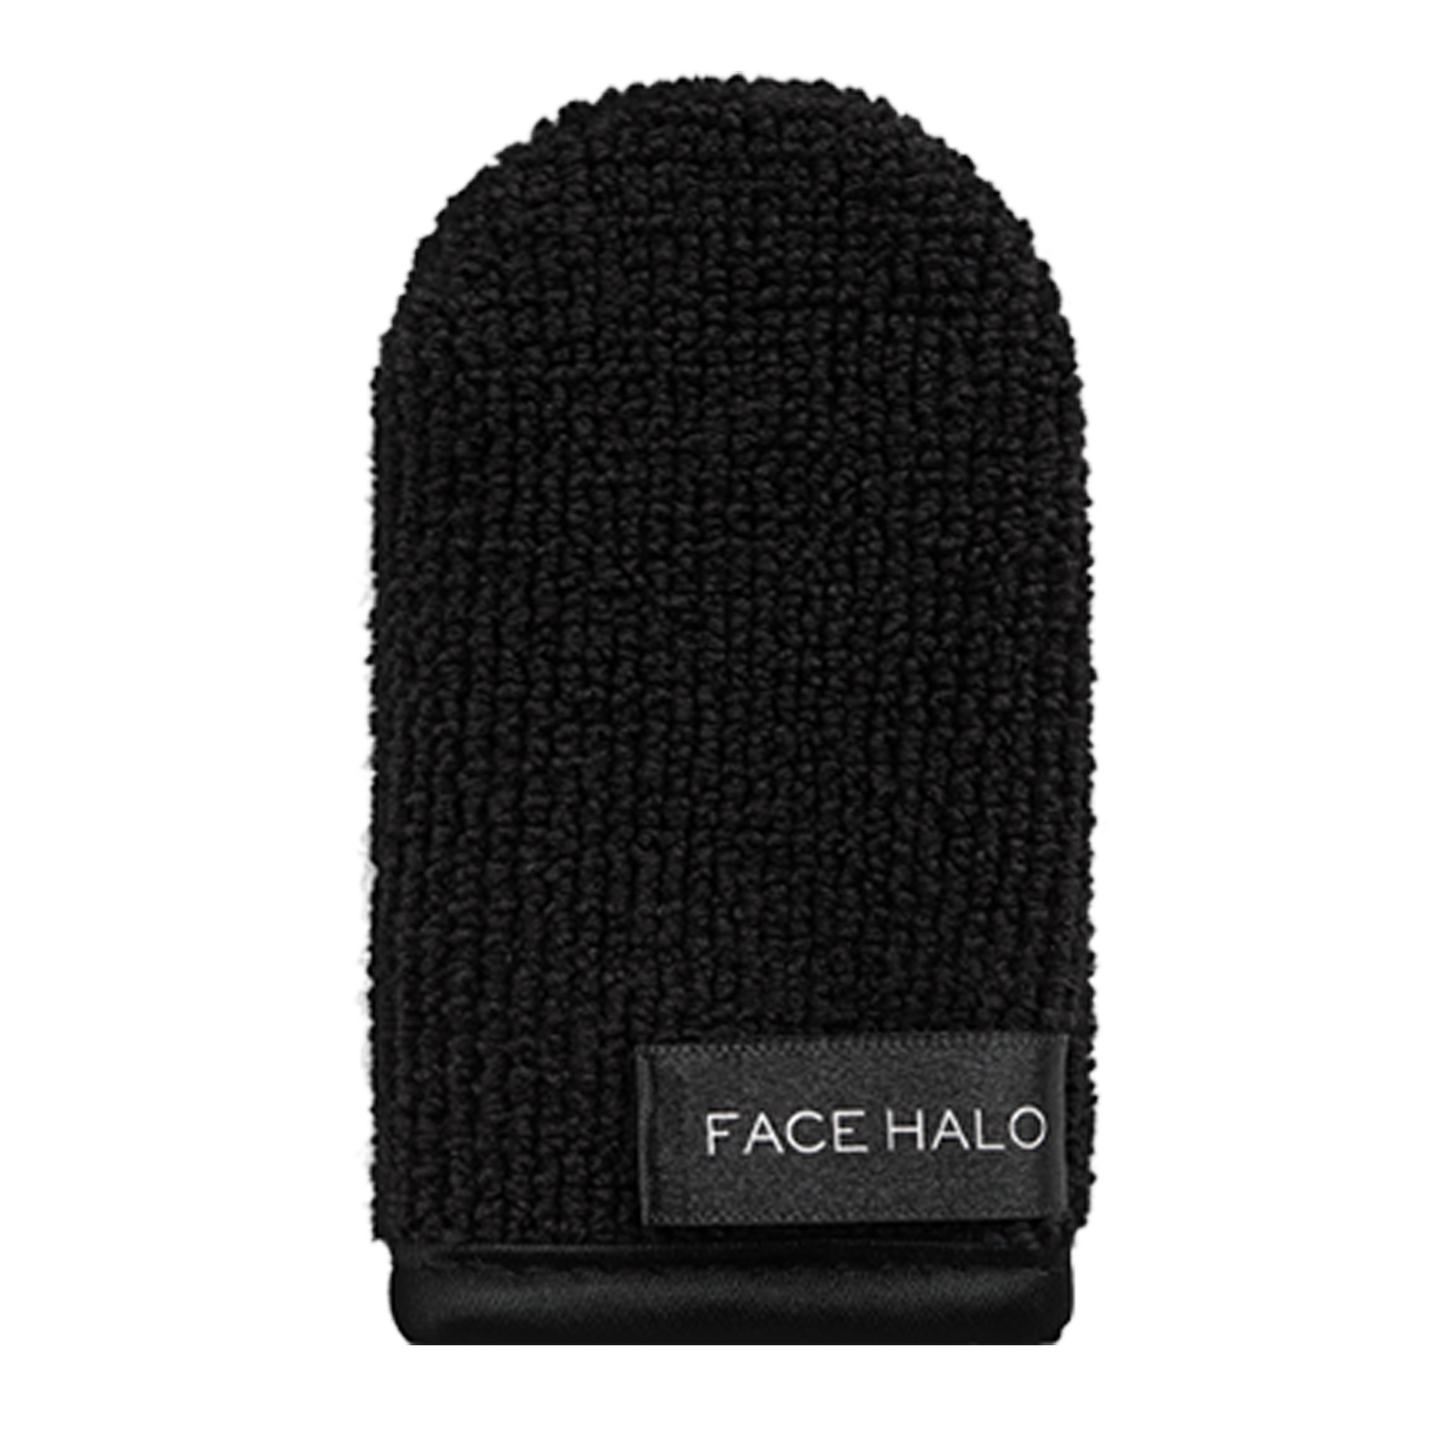 Face Halo X - Eye Makeup Remover - 4 Pack + Washbag